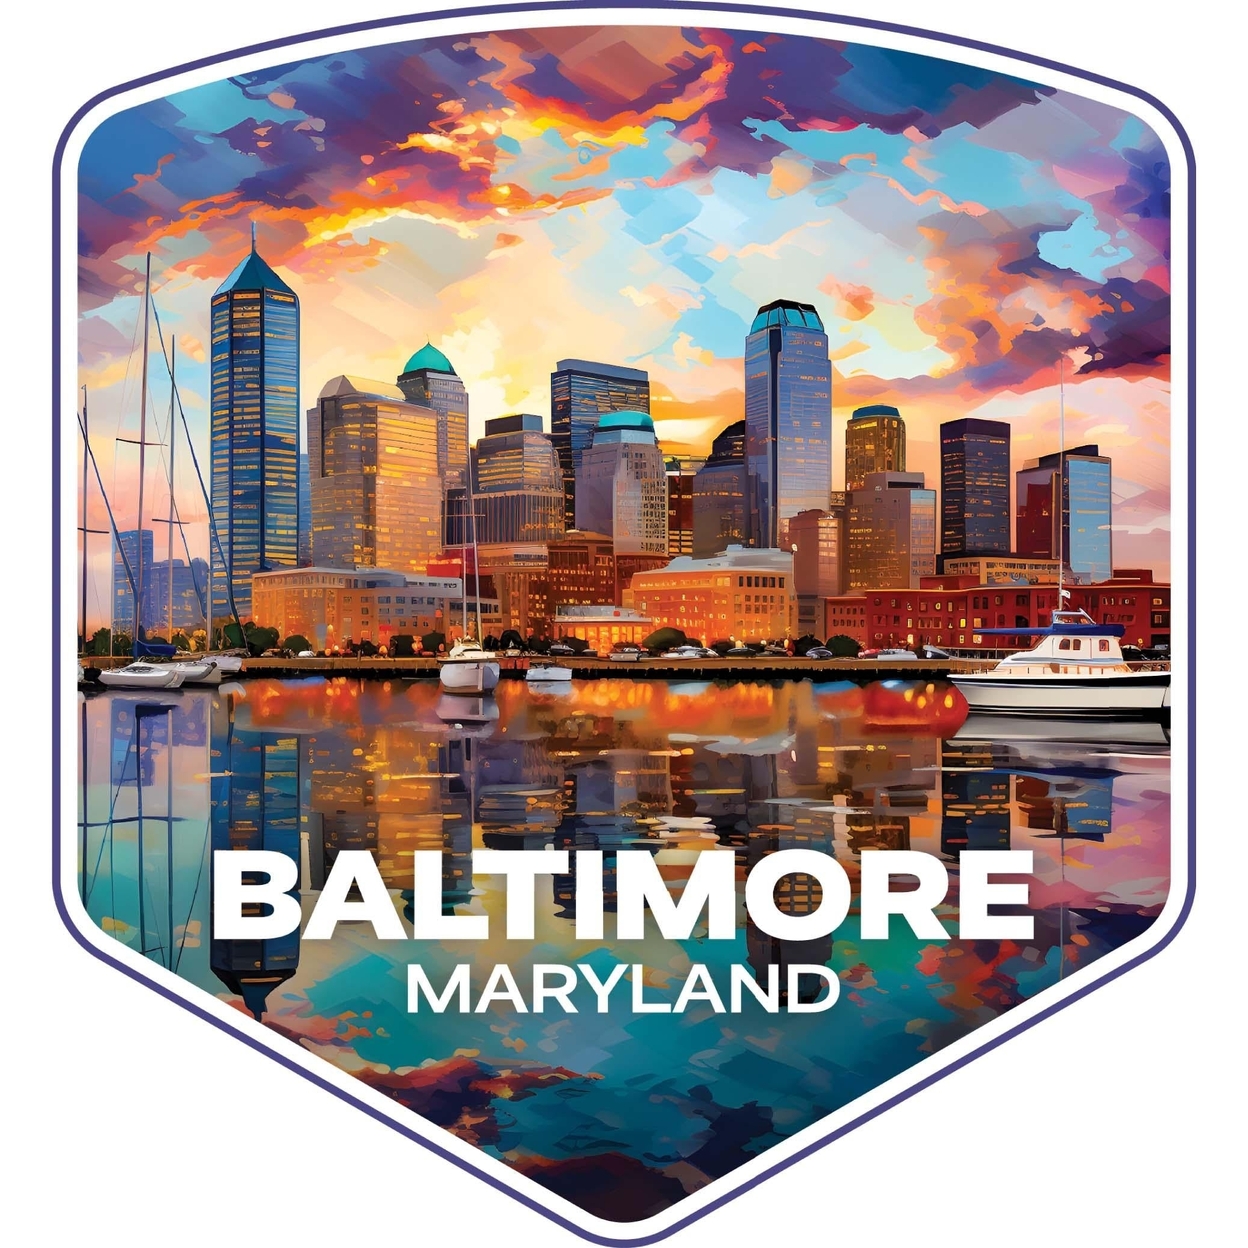 Baltimore Maryland A Souvenir Vinyl Decal Sticker - 2-Inch